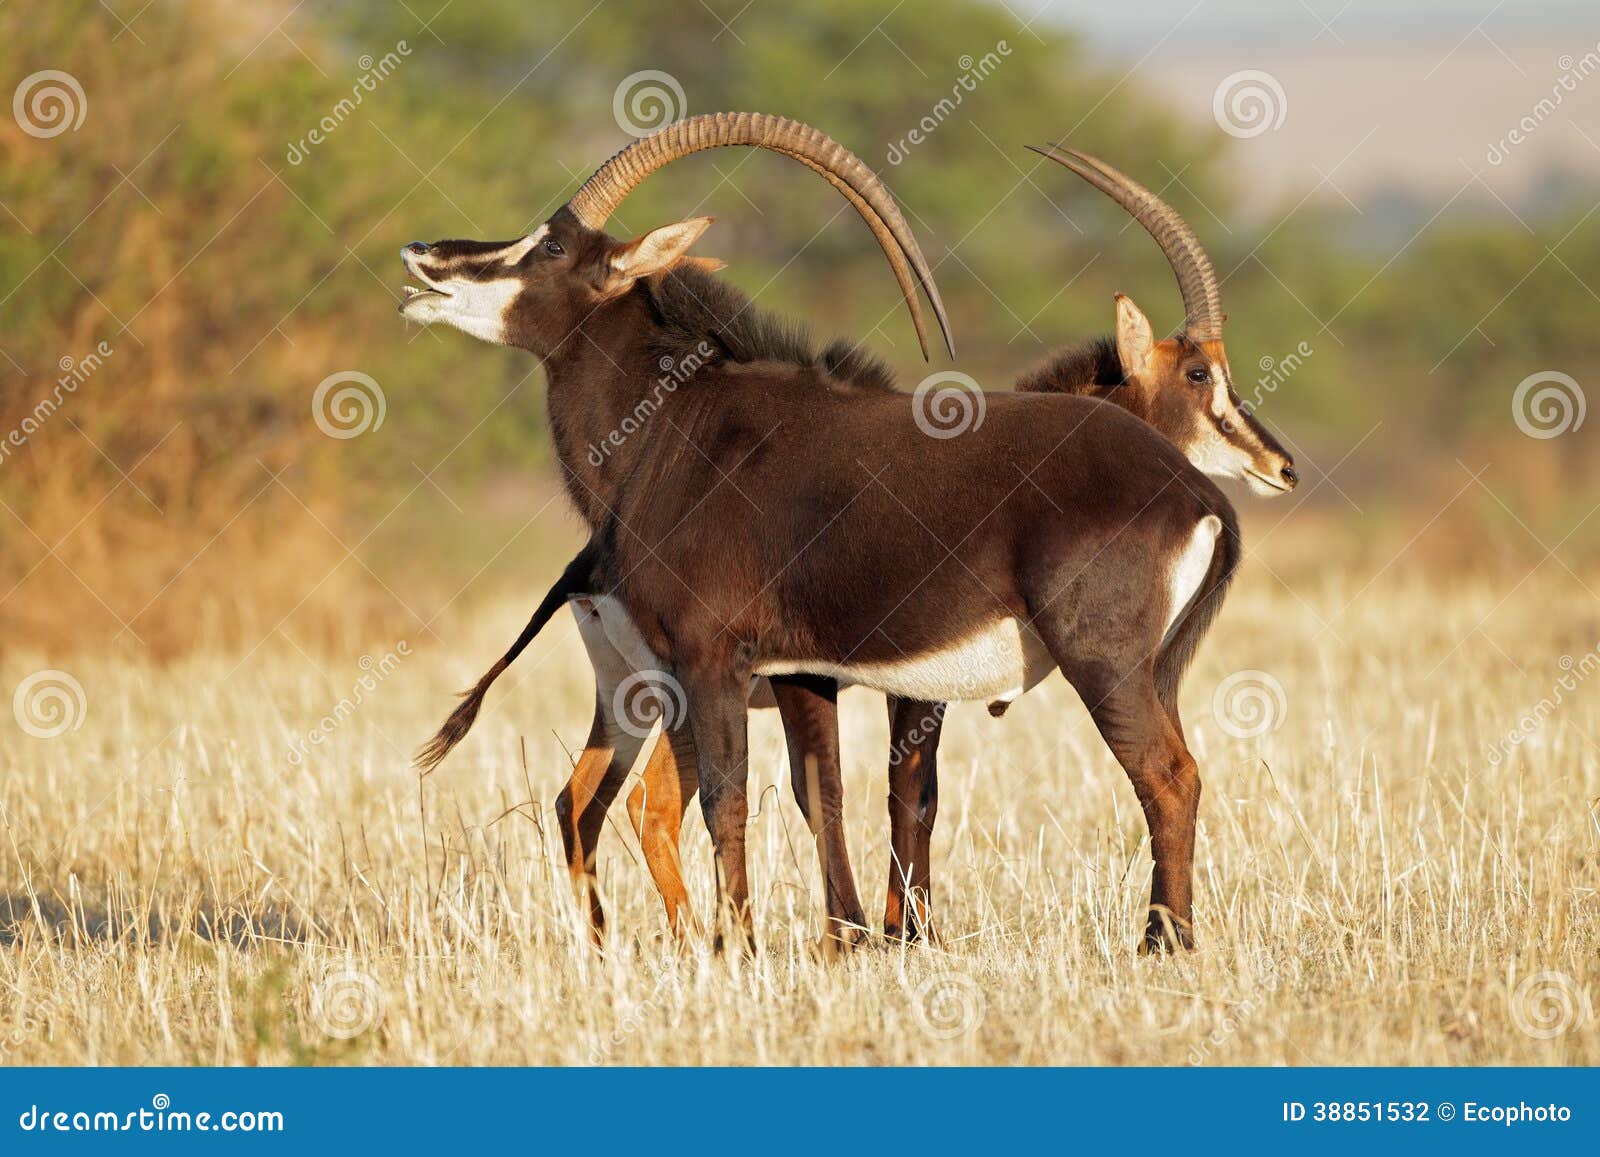 sable antelopes